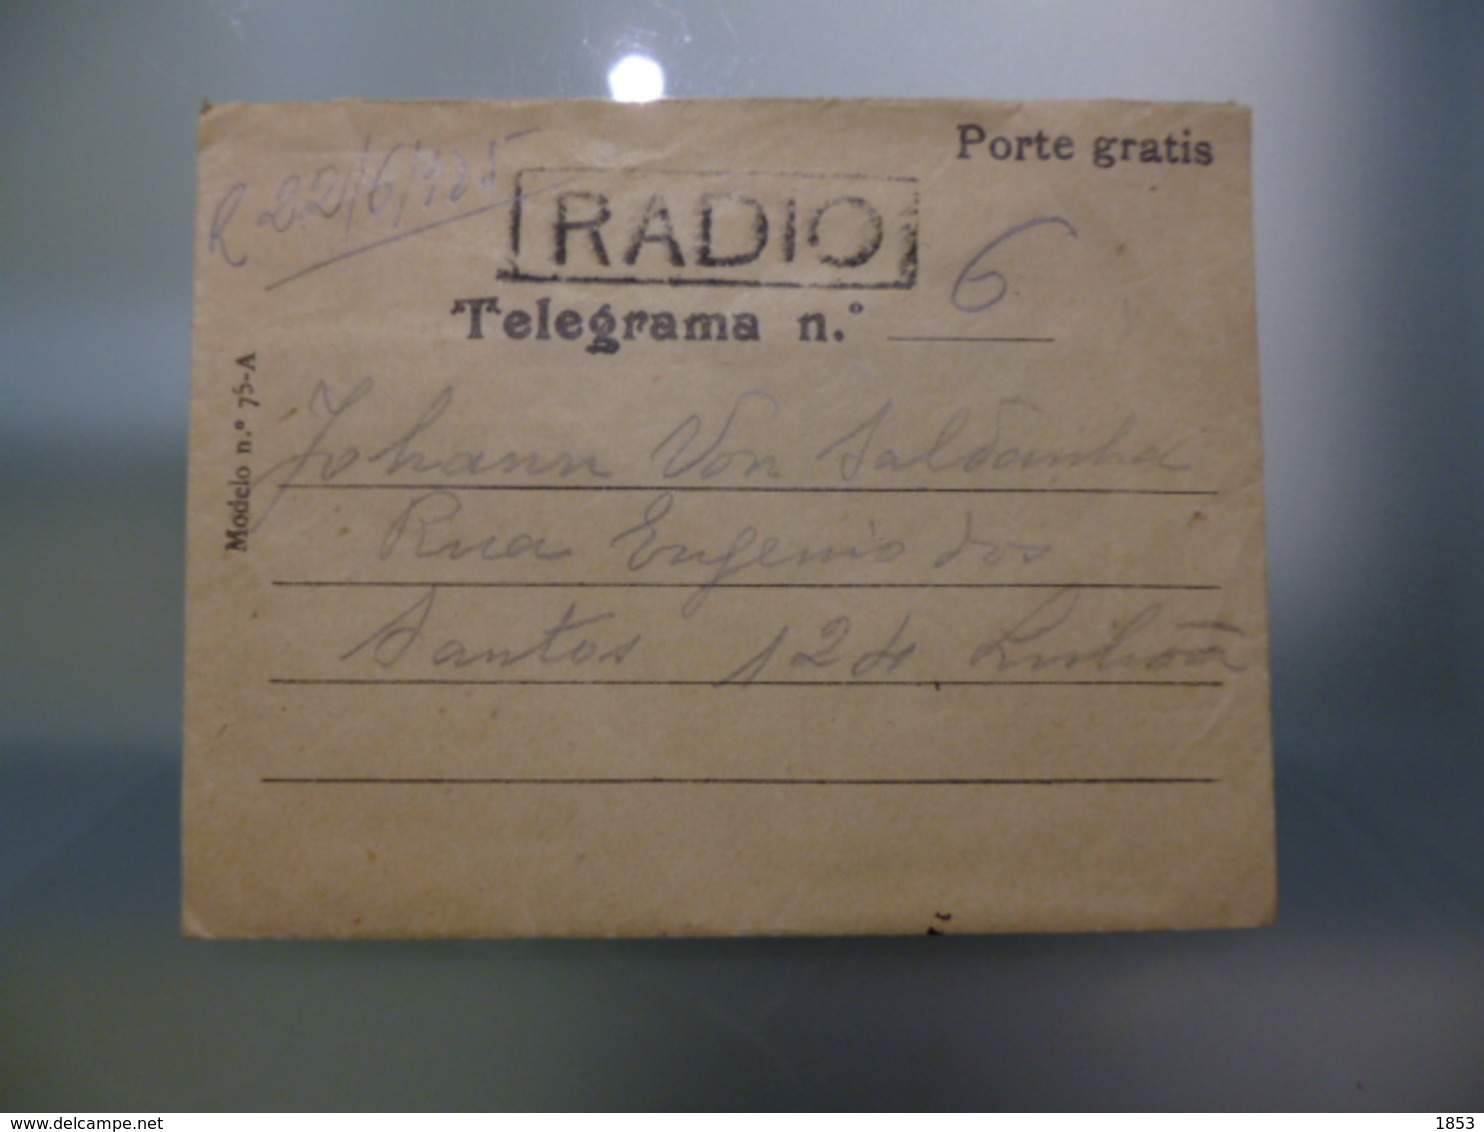 TELEGRAMA - PORTE GRATIS - VIA RÁDIO - Storia Postale